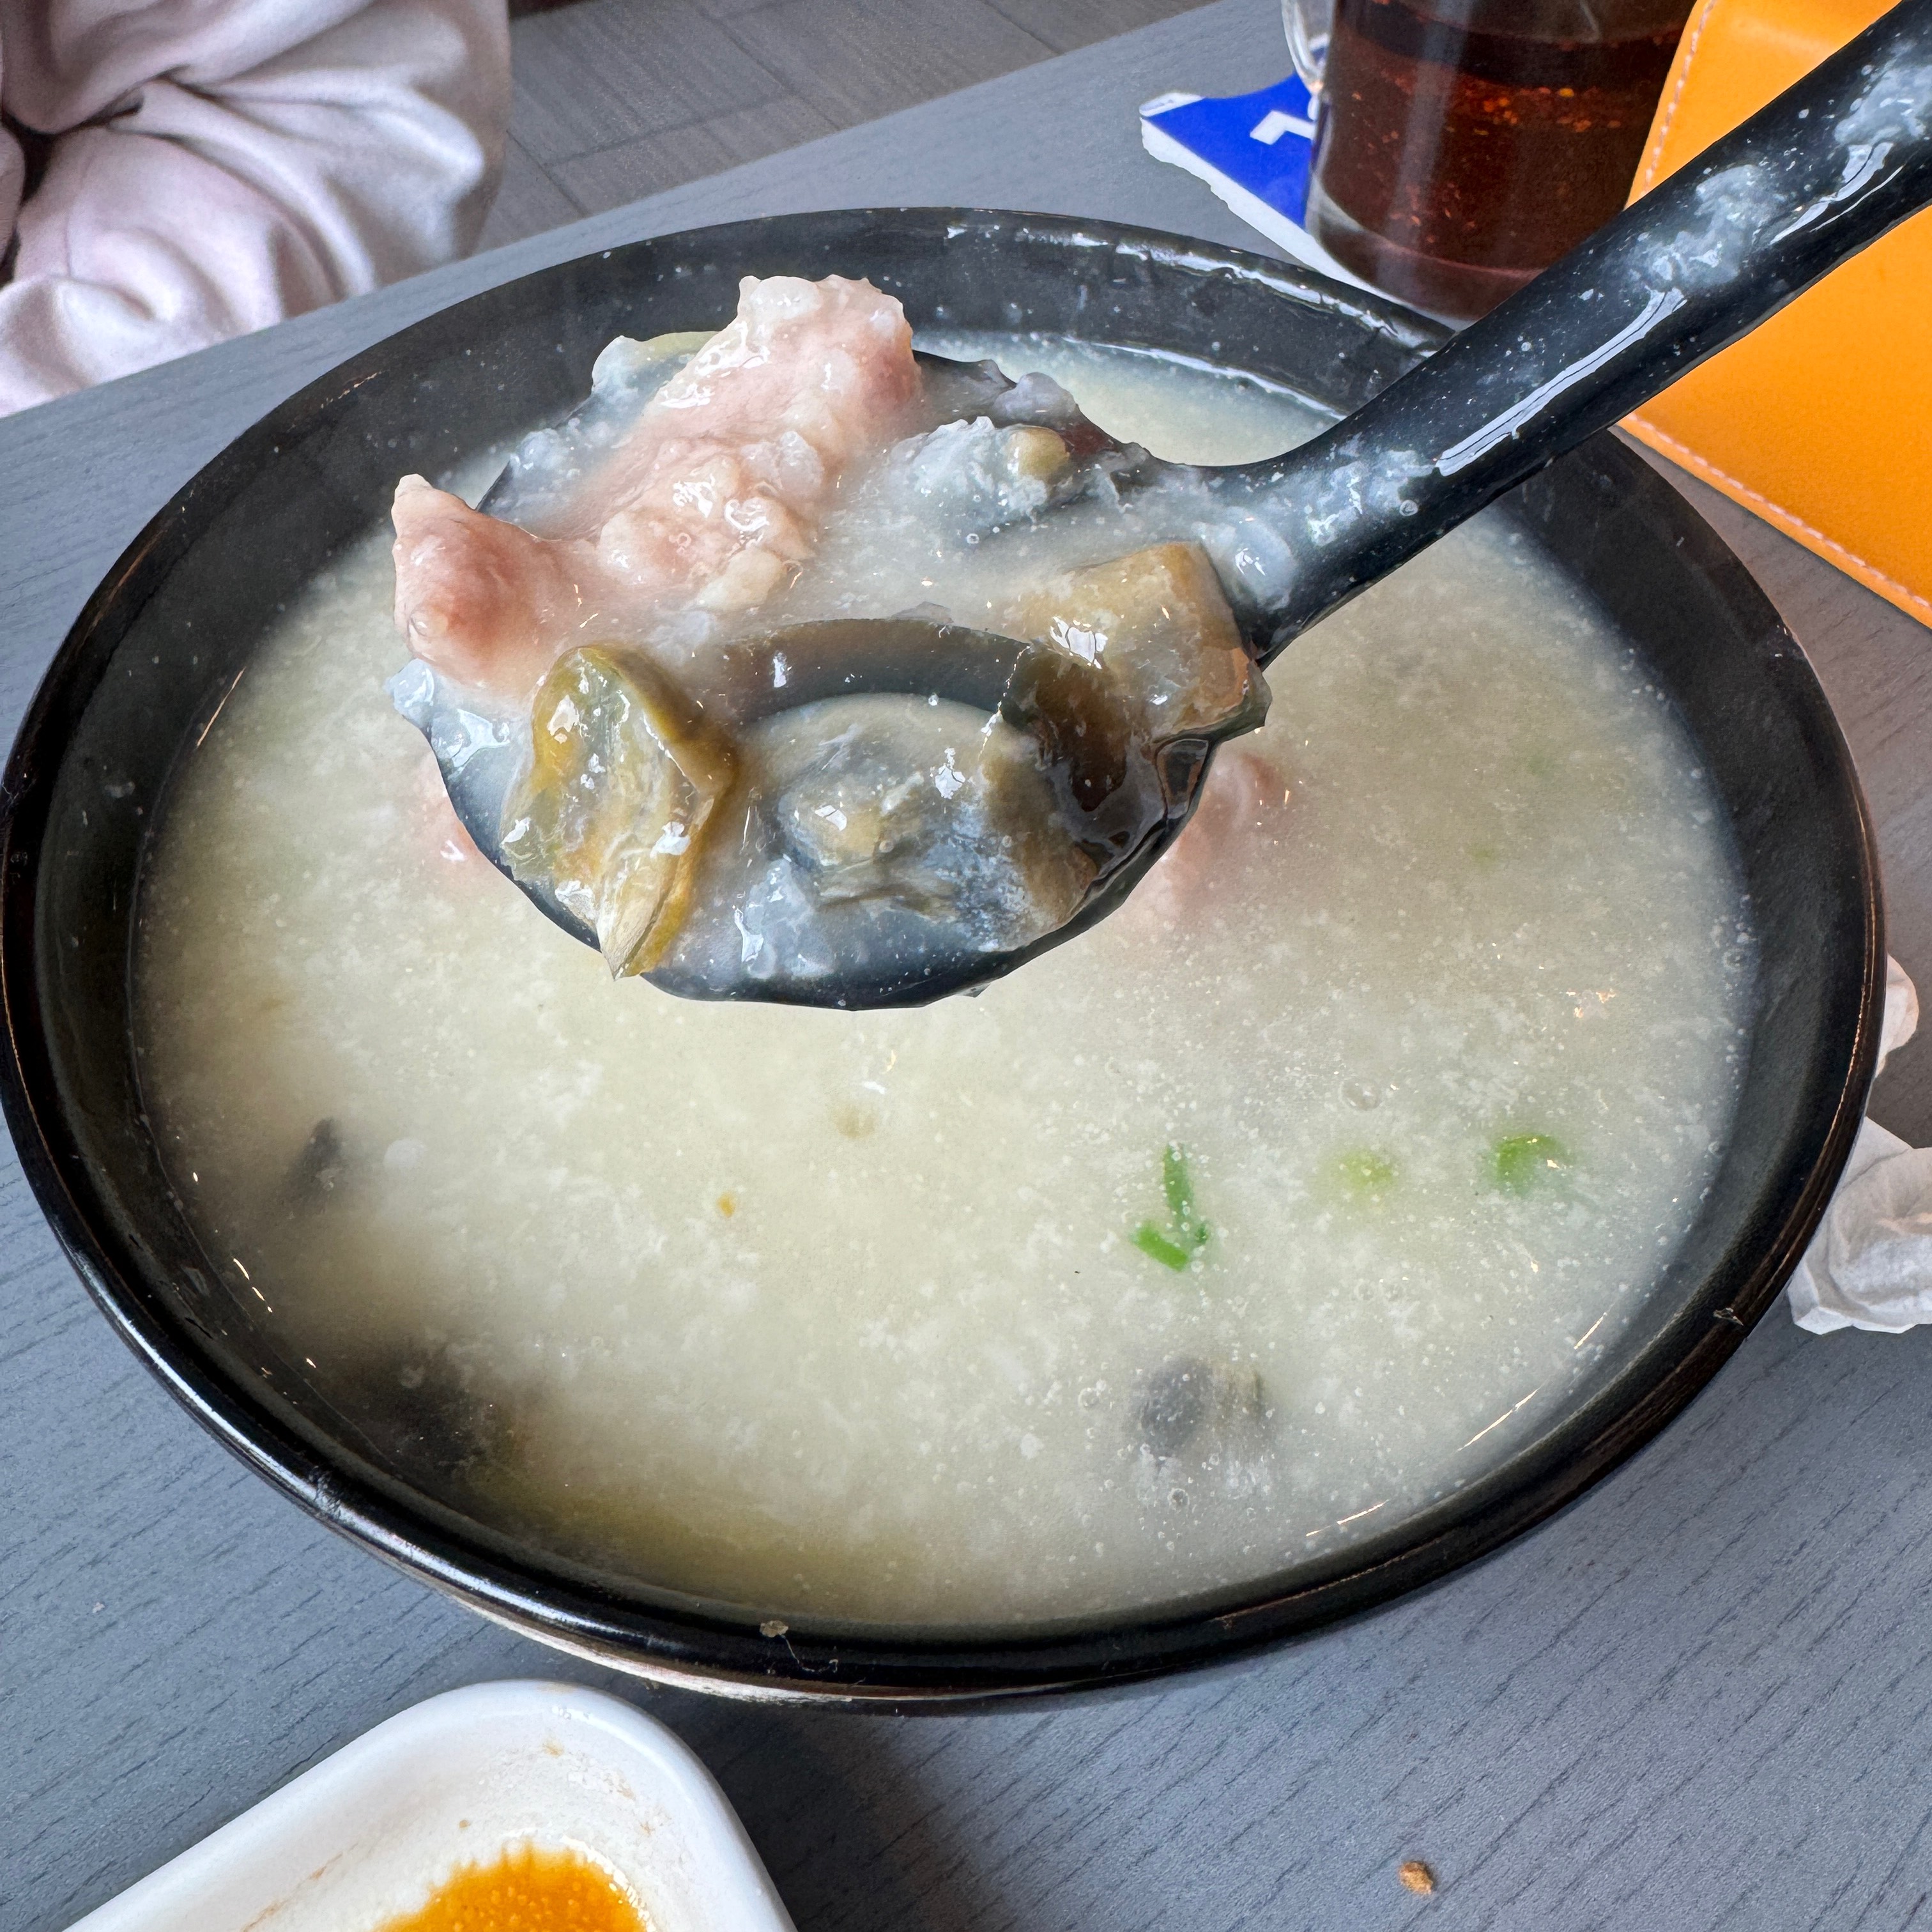 Pork & Preserved Egg Porridge Congee $8.50 from Mr. Champion (冠軍) on #foodmento http://foodmento.com/dish/57767